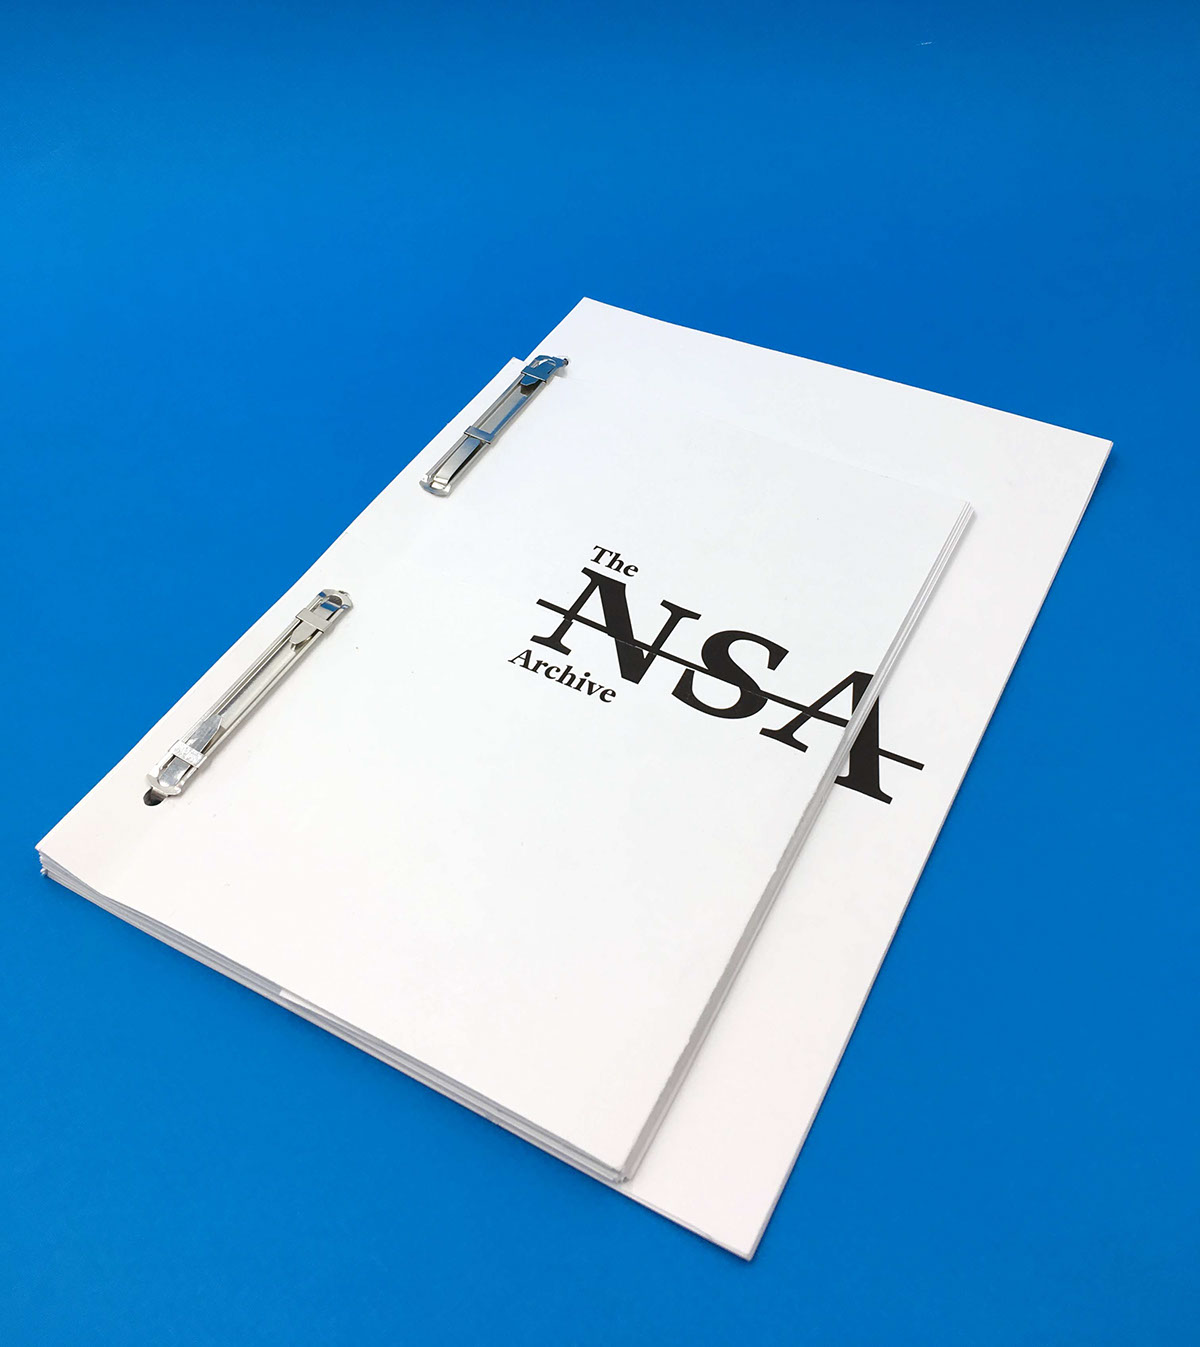 forth between NSA staff following Edward Snowden's leak coupled "Cryptolog nsa surveillance